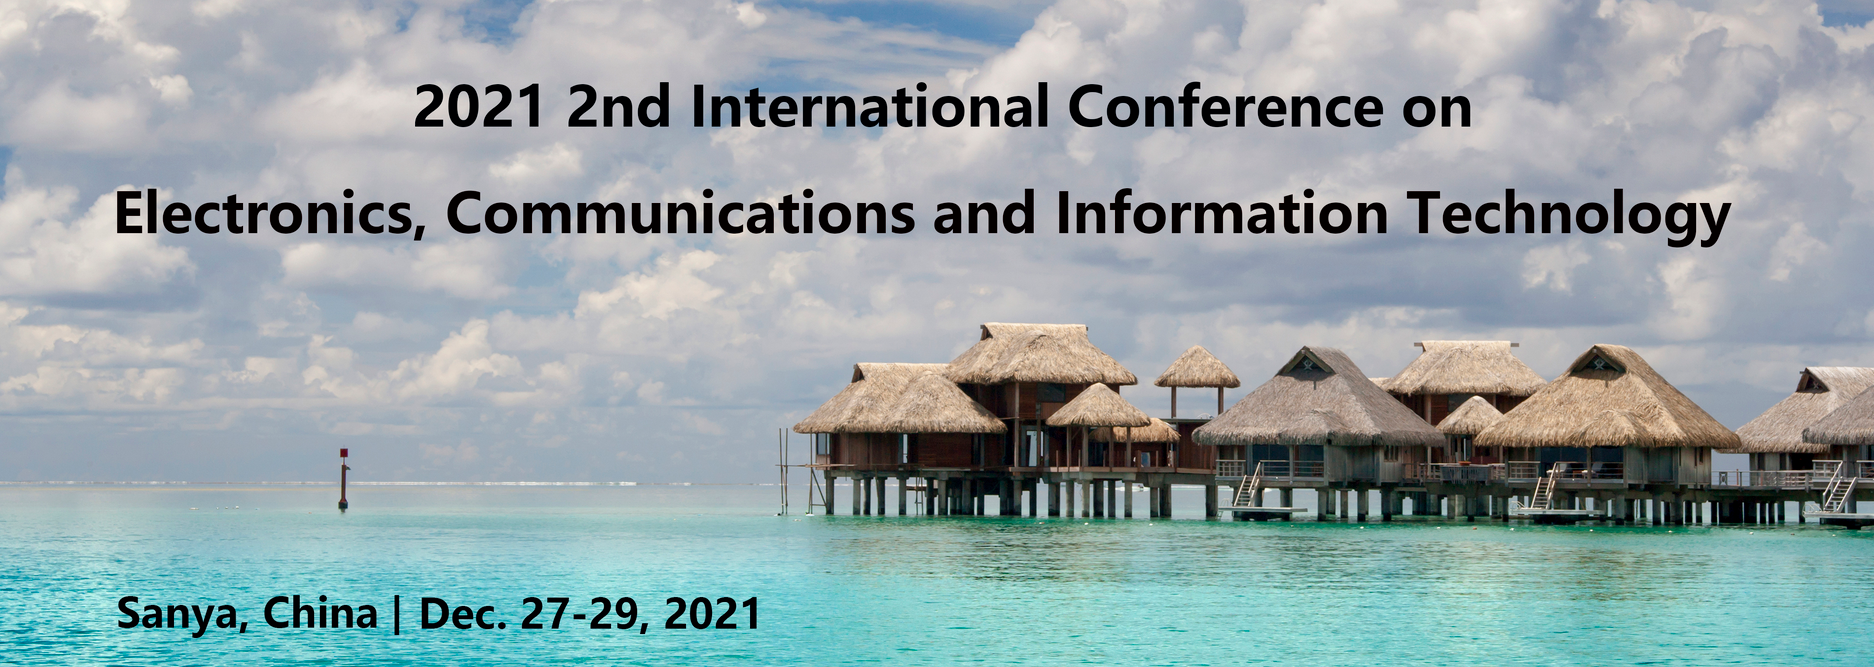 2021 2nd International Conference on Electronics, Communications and Information Technology (CECIT 2021), Sanya, Hainan, China